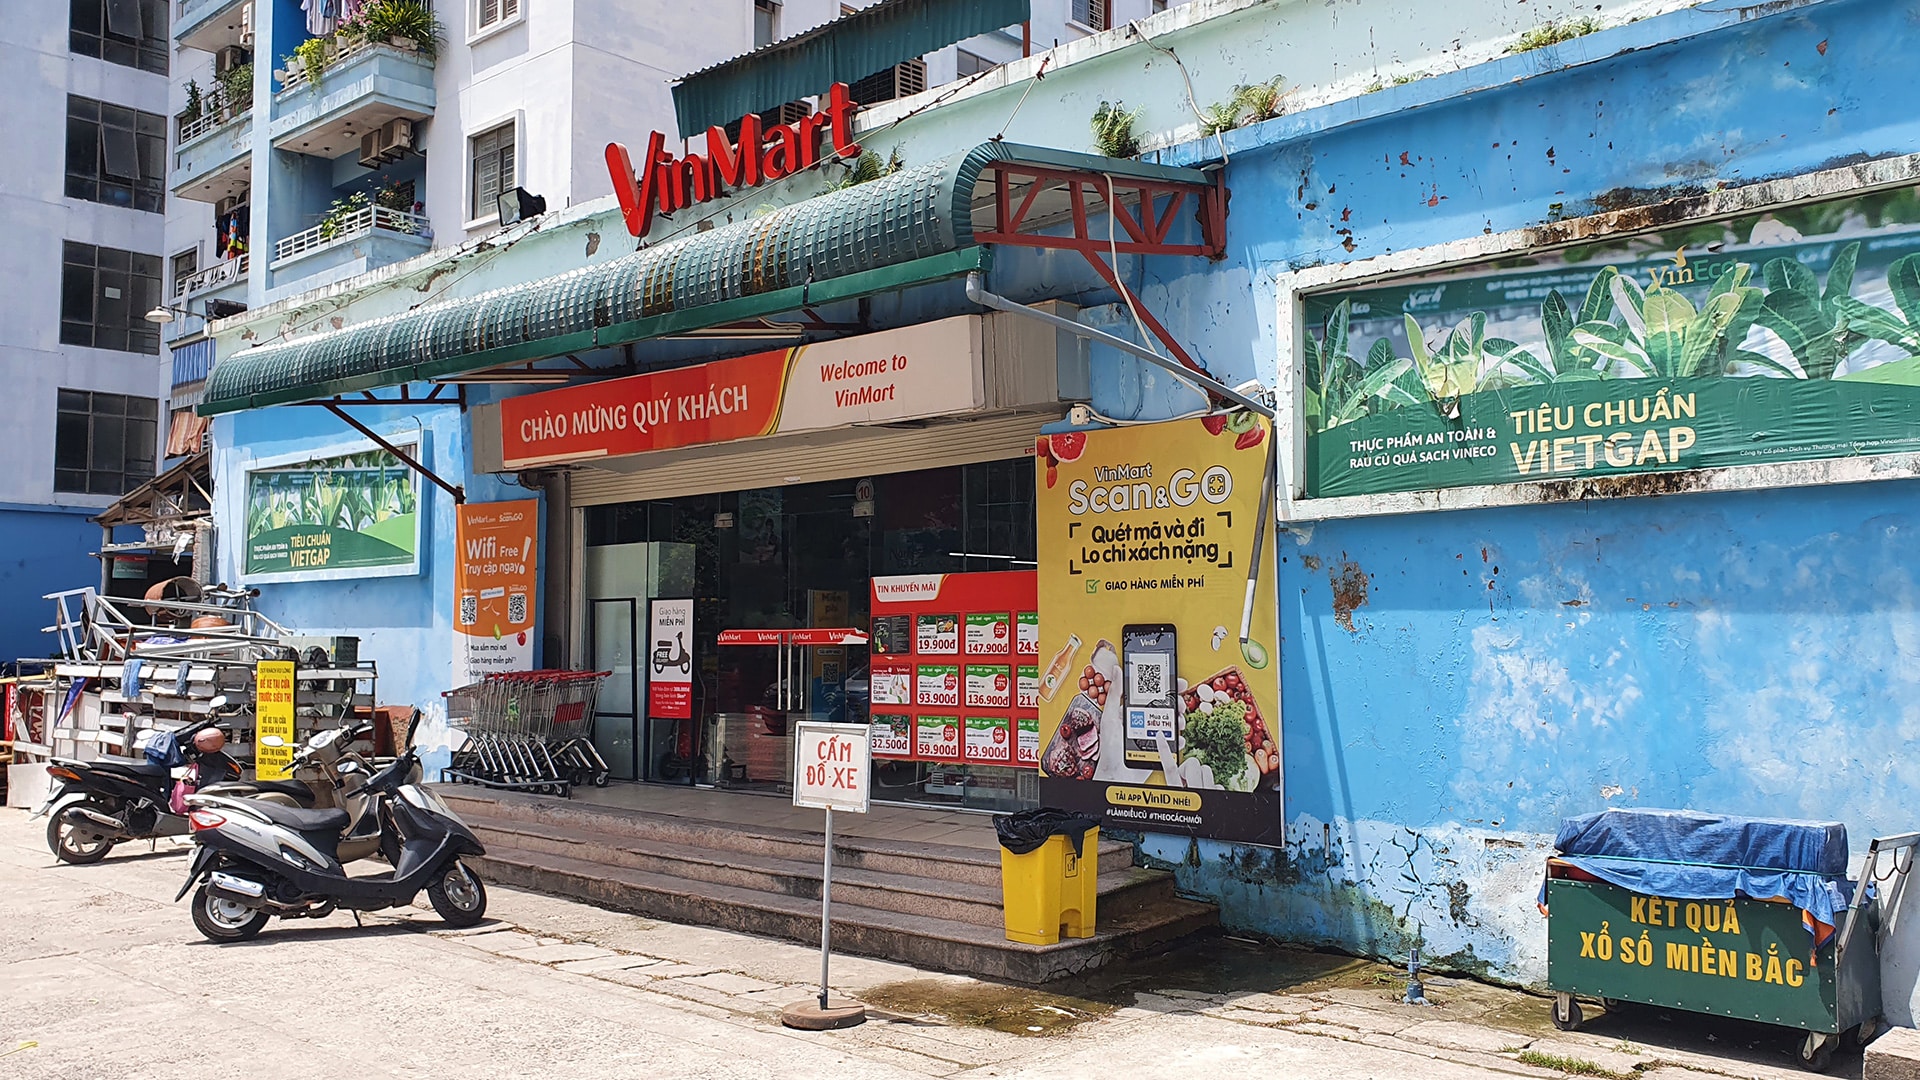 a Vinmart supermarket in south Hanoi